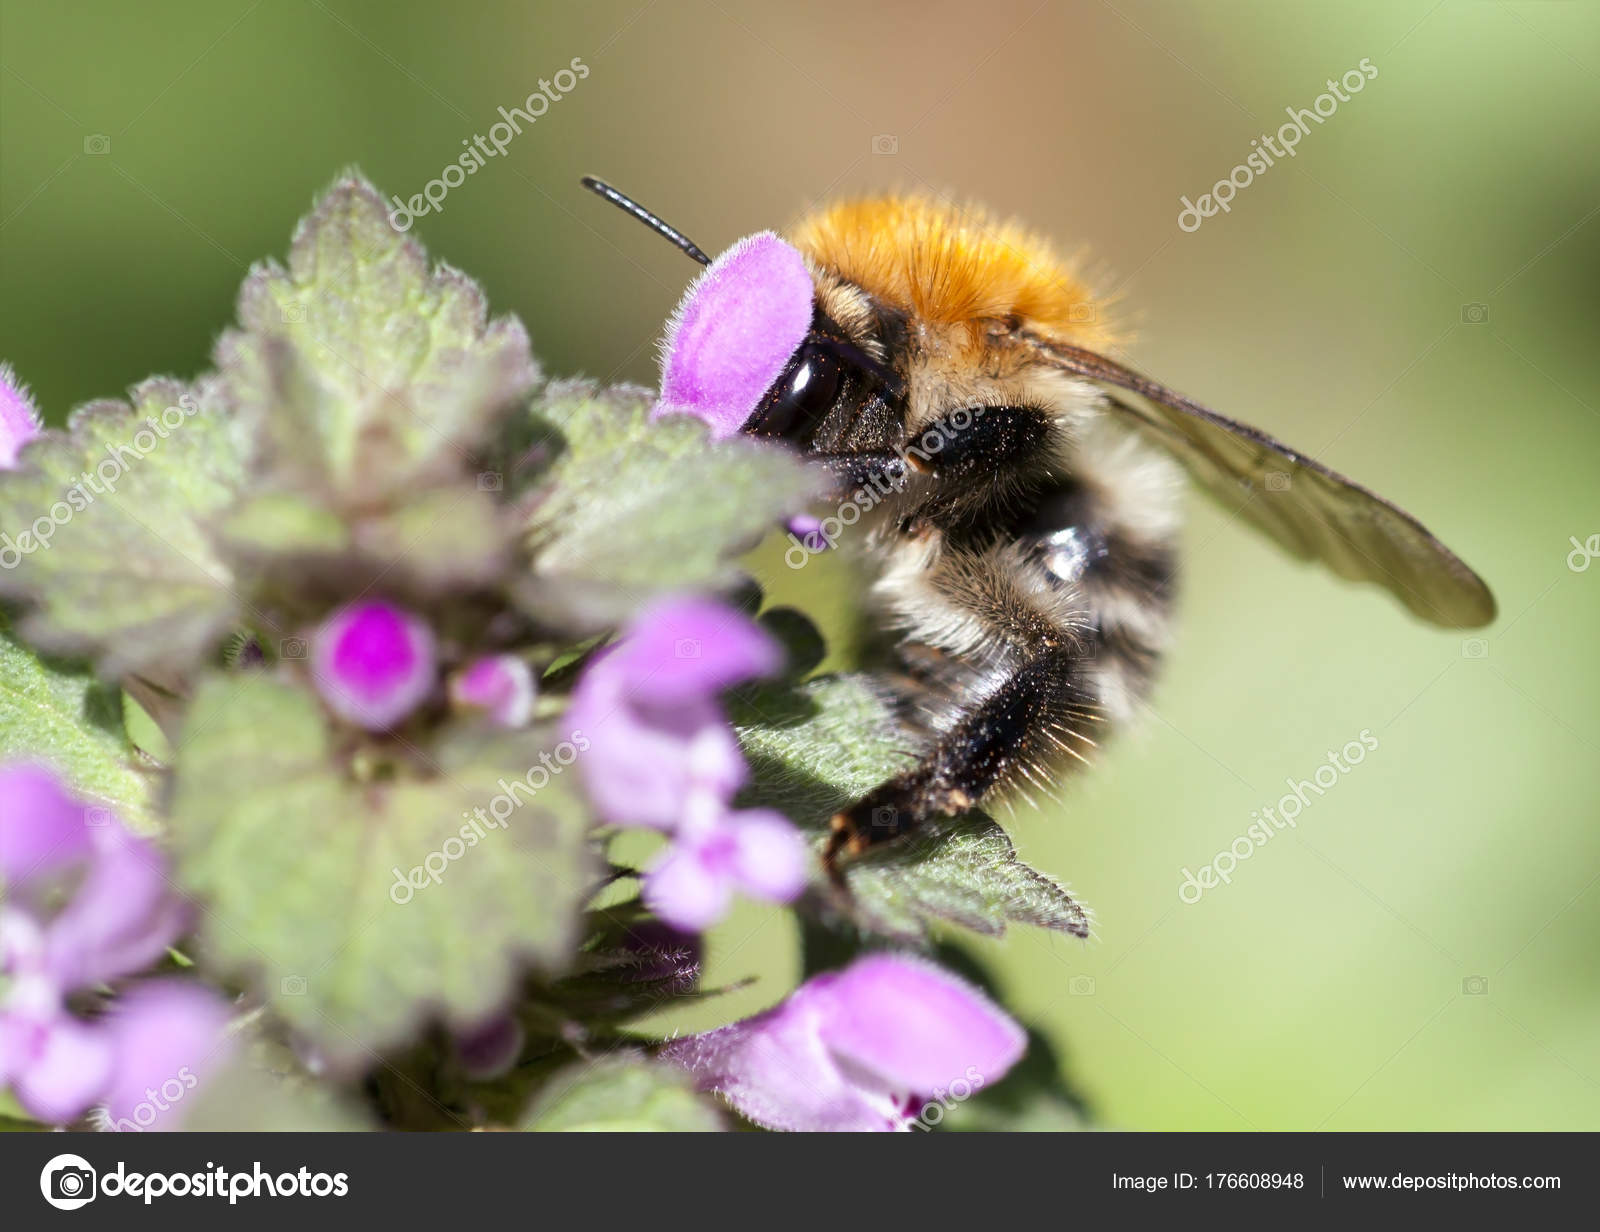 Bumble bee on flower — Stock Photo © marenka1 #176608948